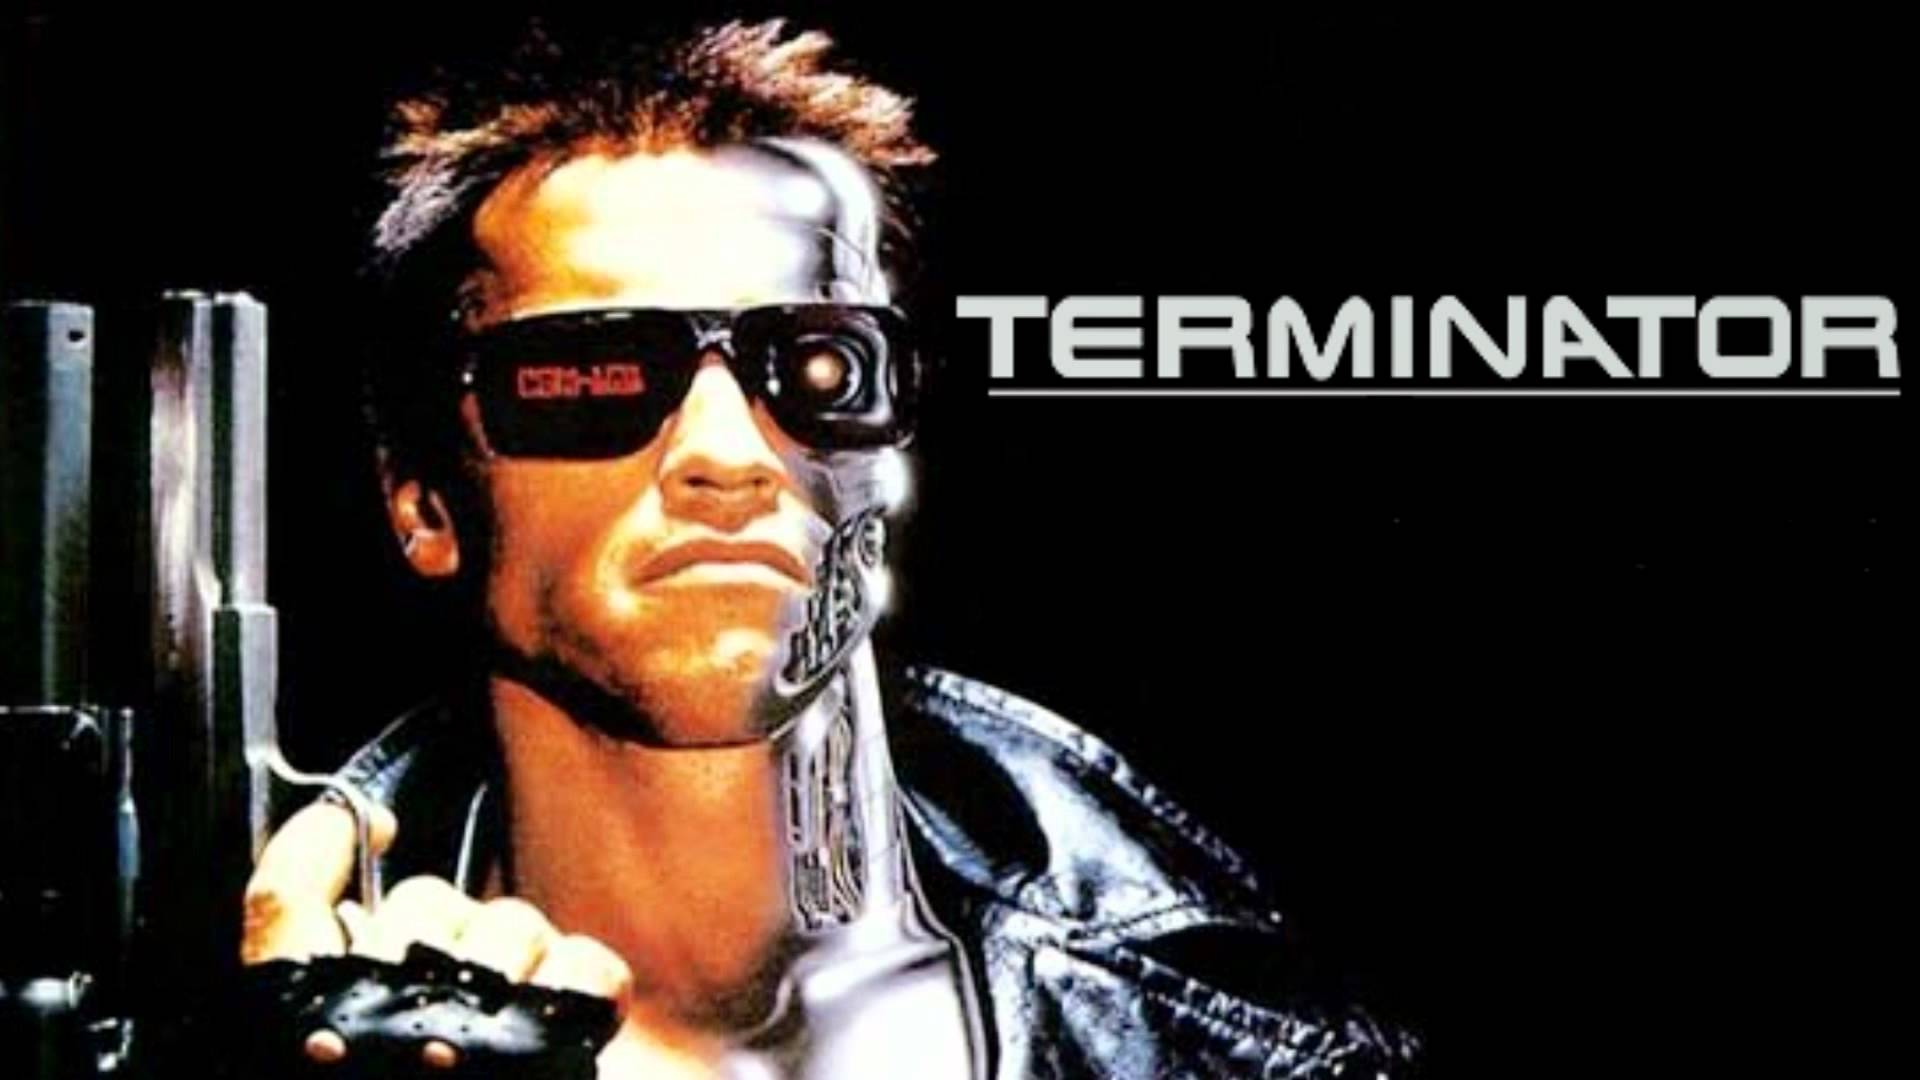 The Terminator #2